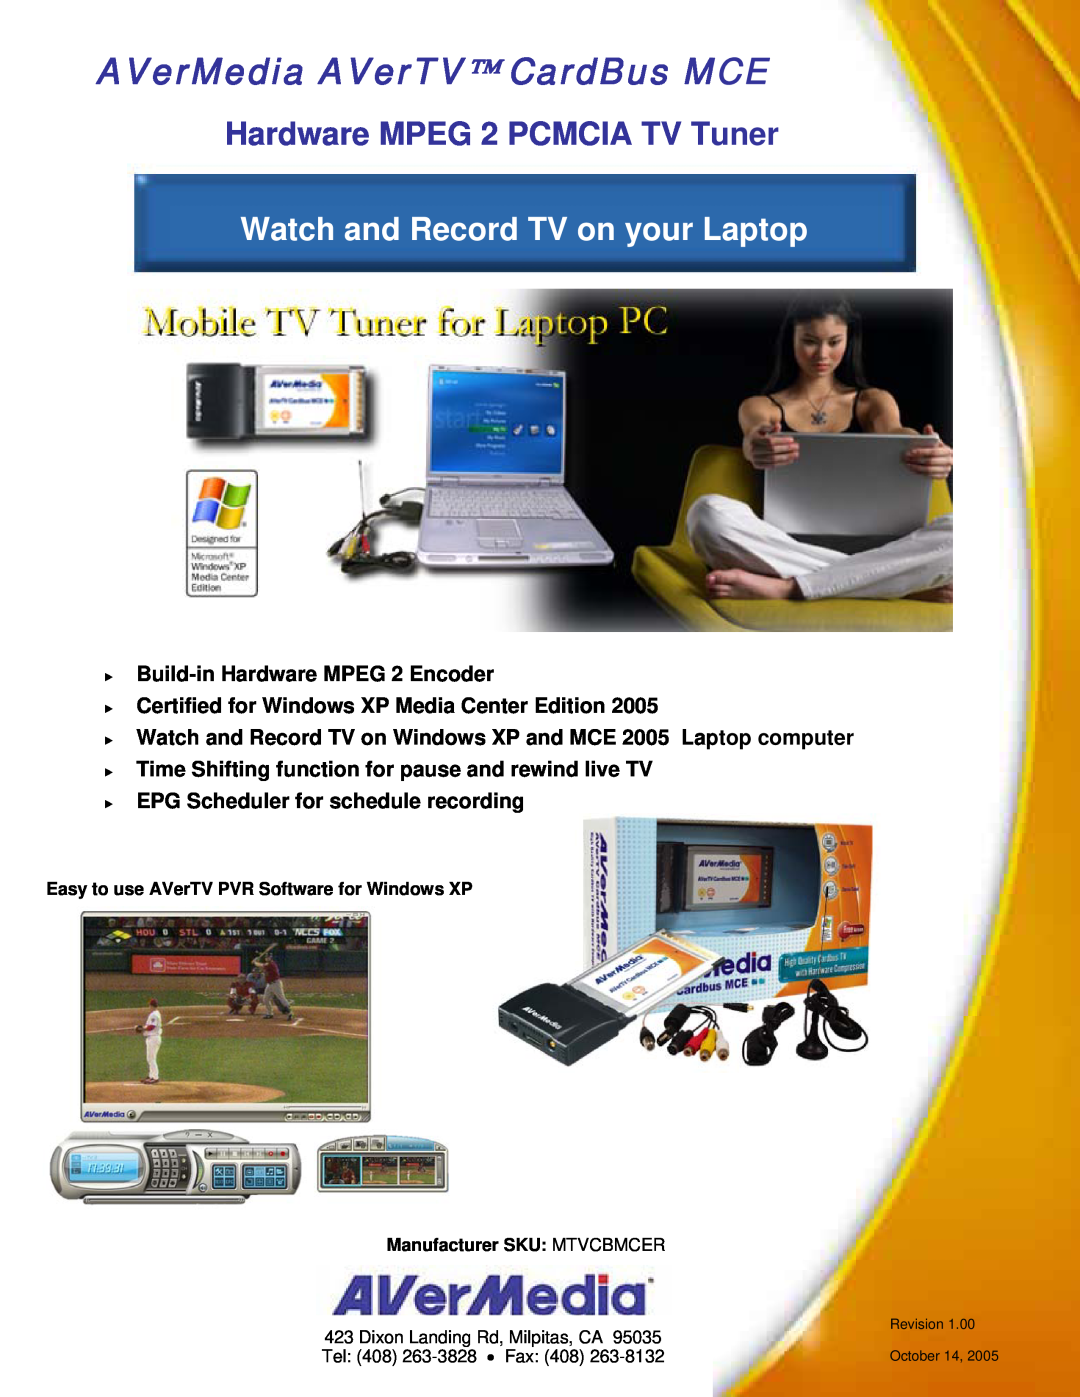 AVerMedia Technologies manual AVerMedia AVerTV CardBus MCE, Hardware MPEG 2 PCMCIA TV Tuner 